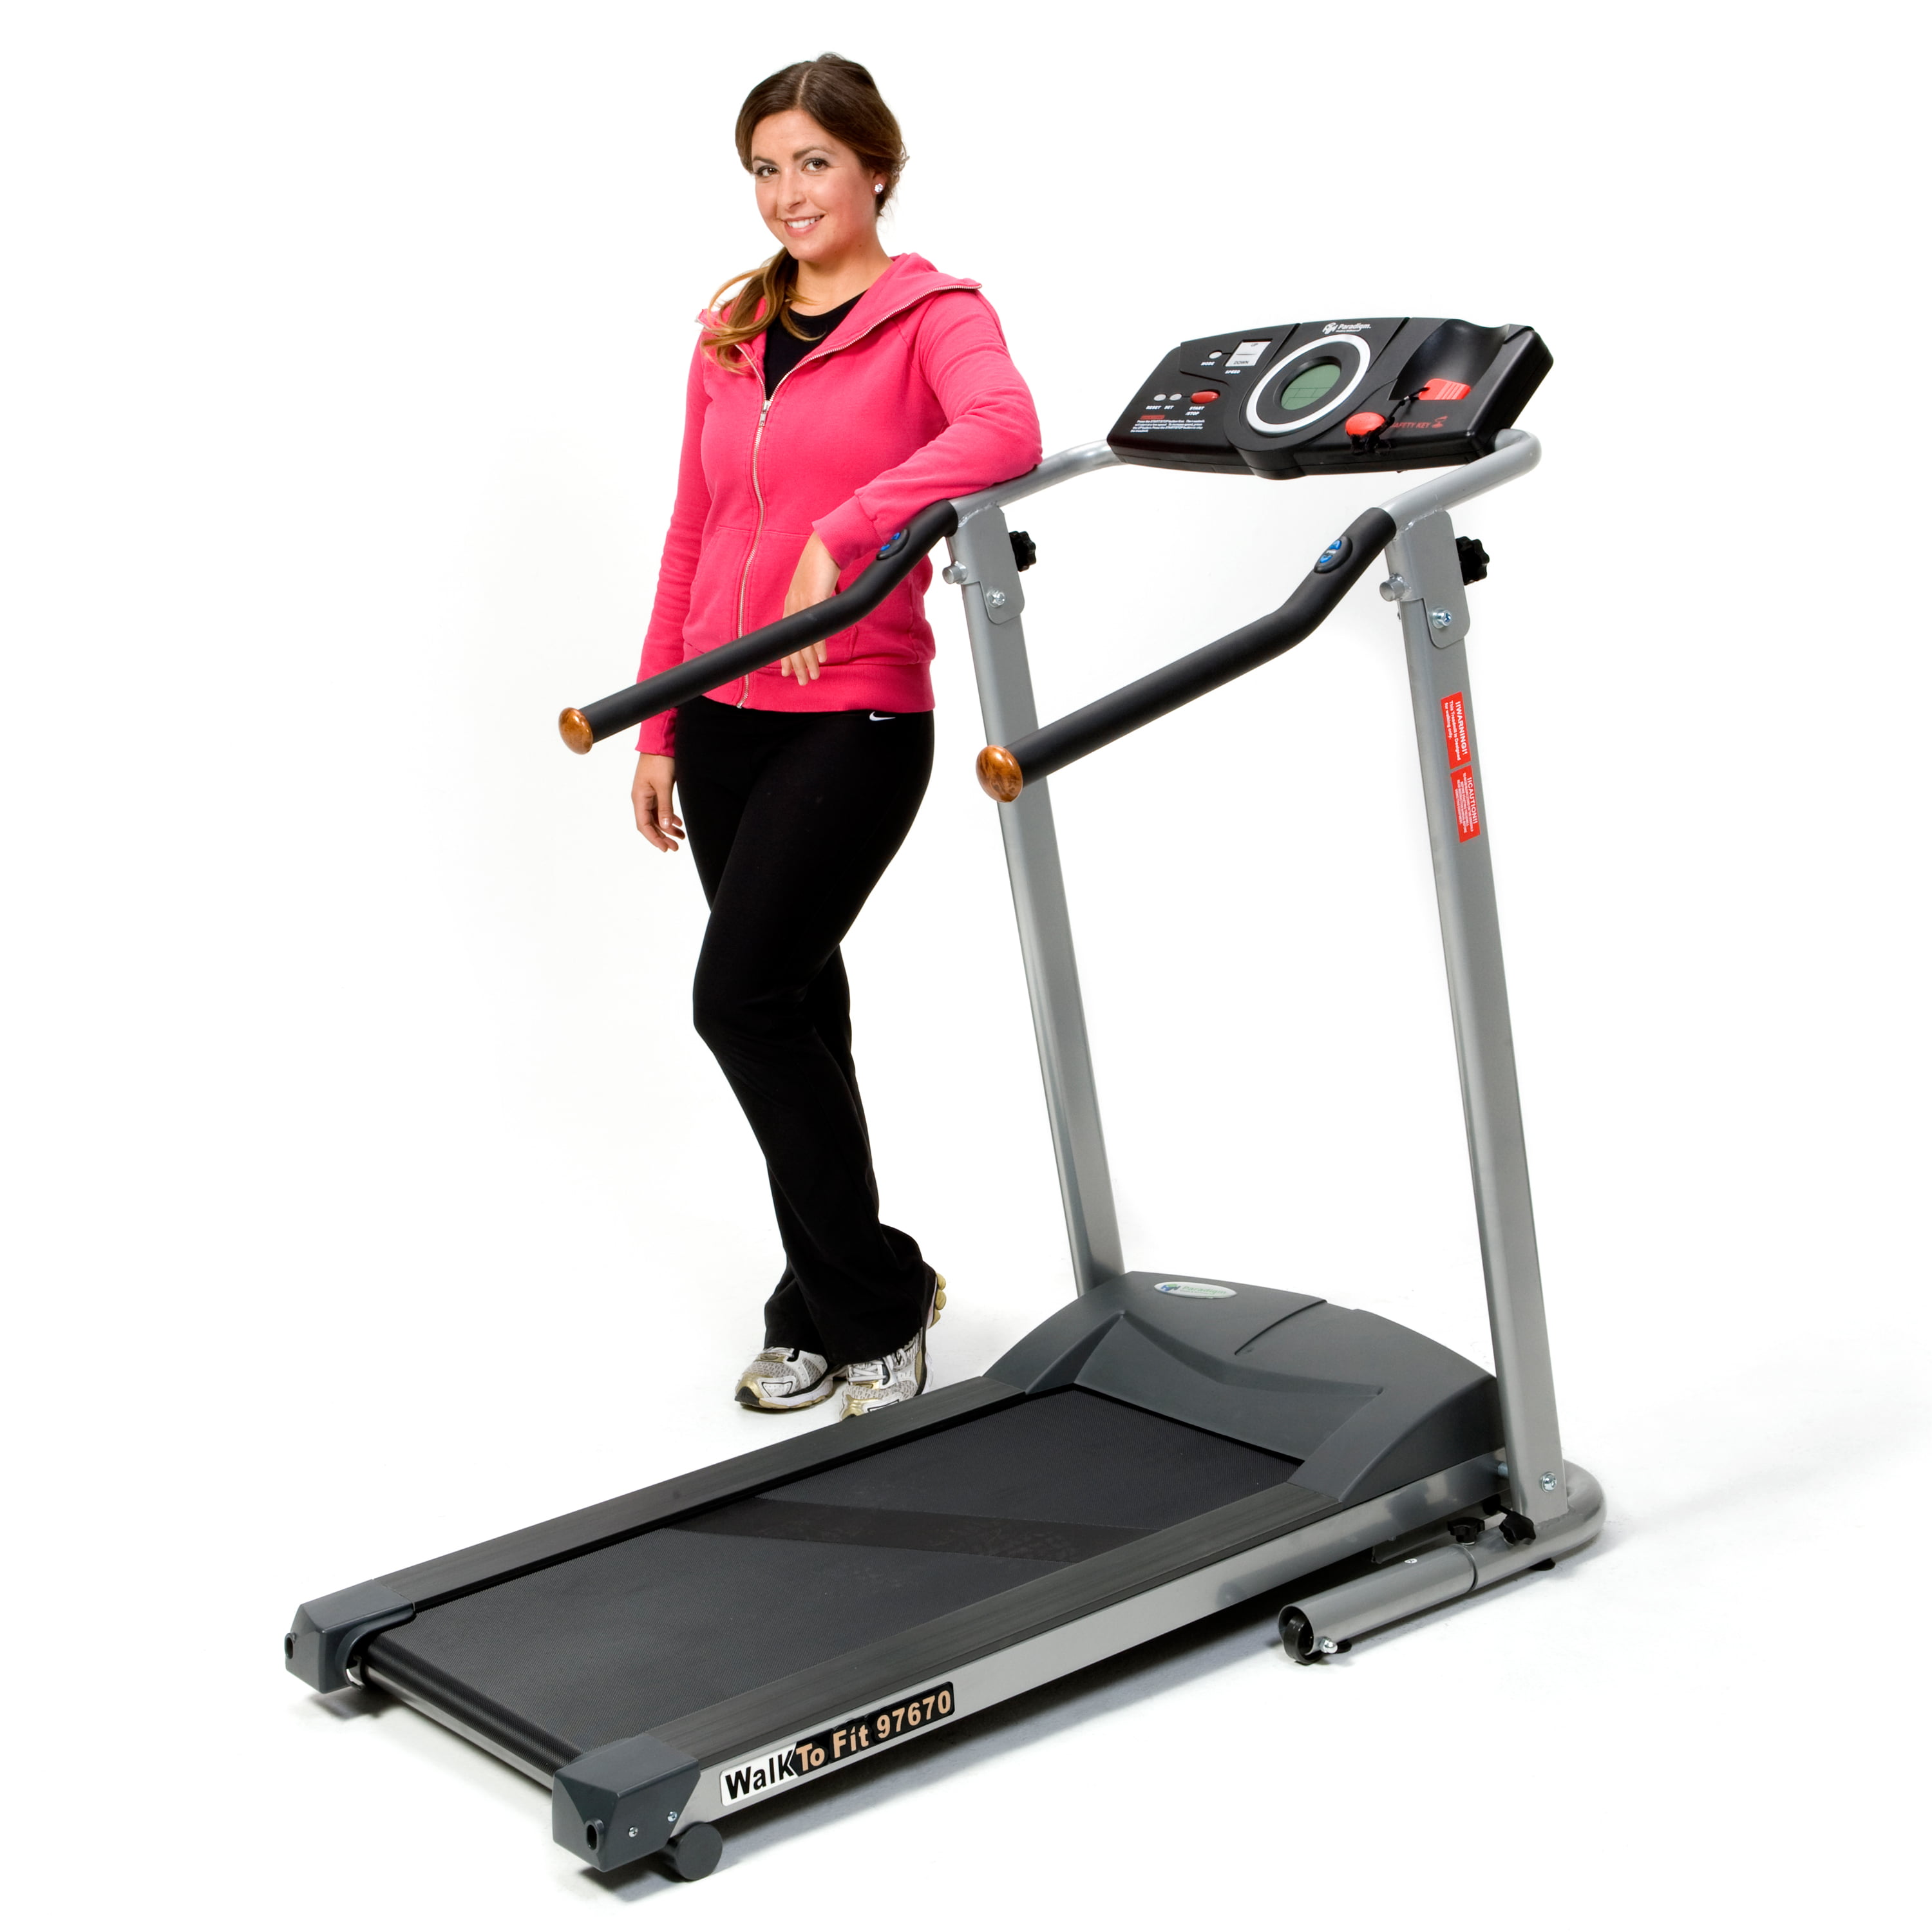 Free pictures of hot girls on treadmills Paradigm Exerpeutic Tf900 Walking Electric Treadmill Walmart Com Walmart Com